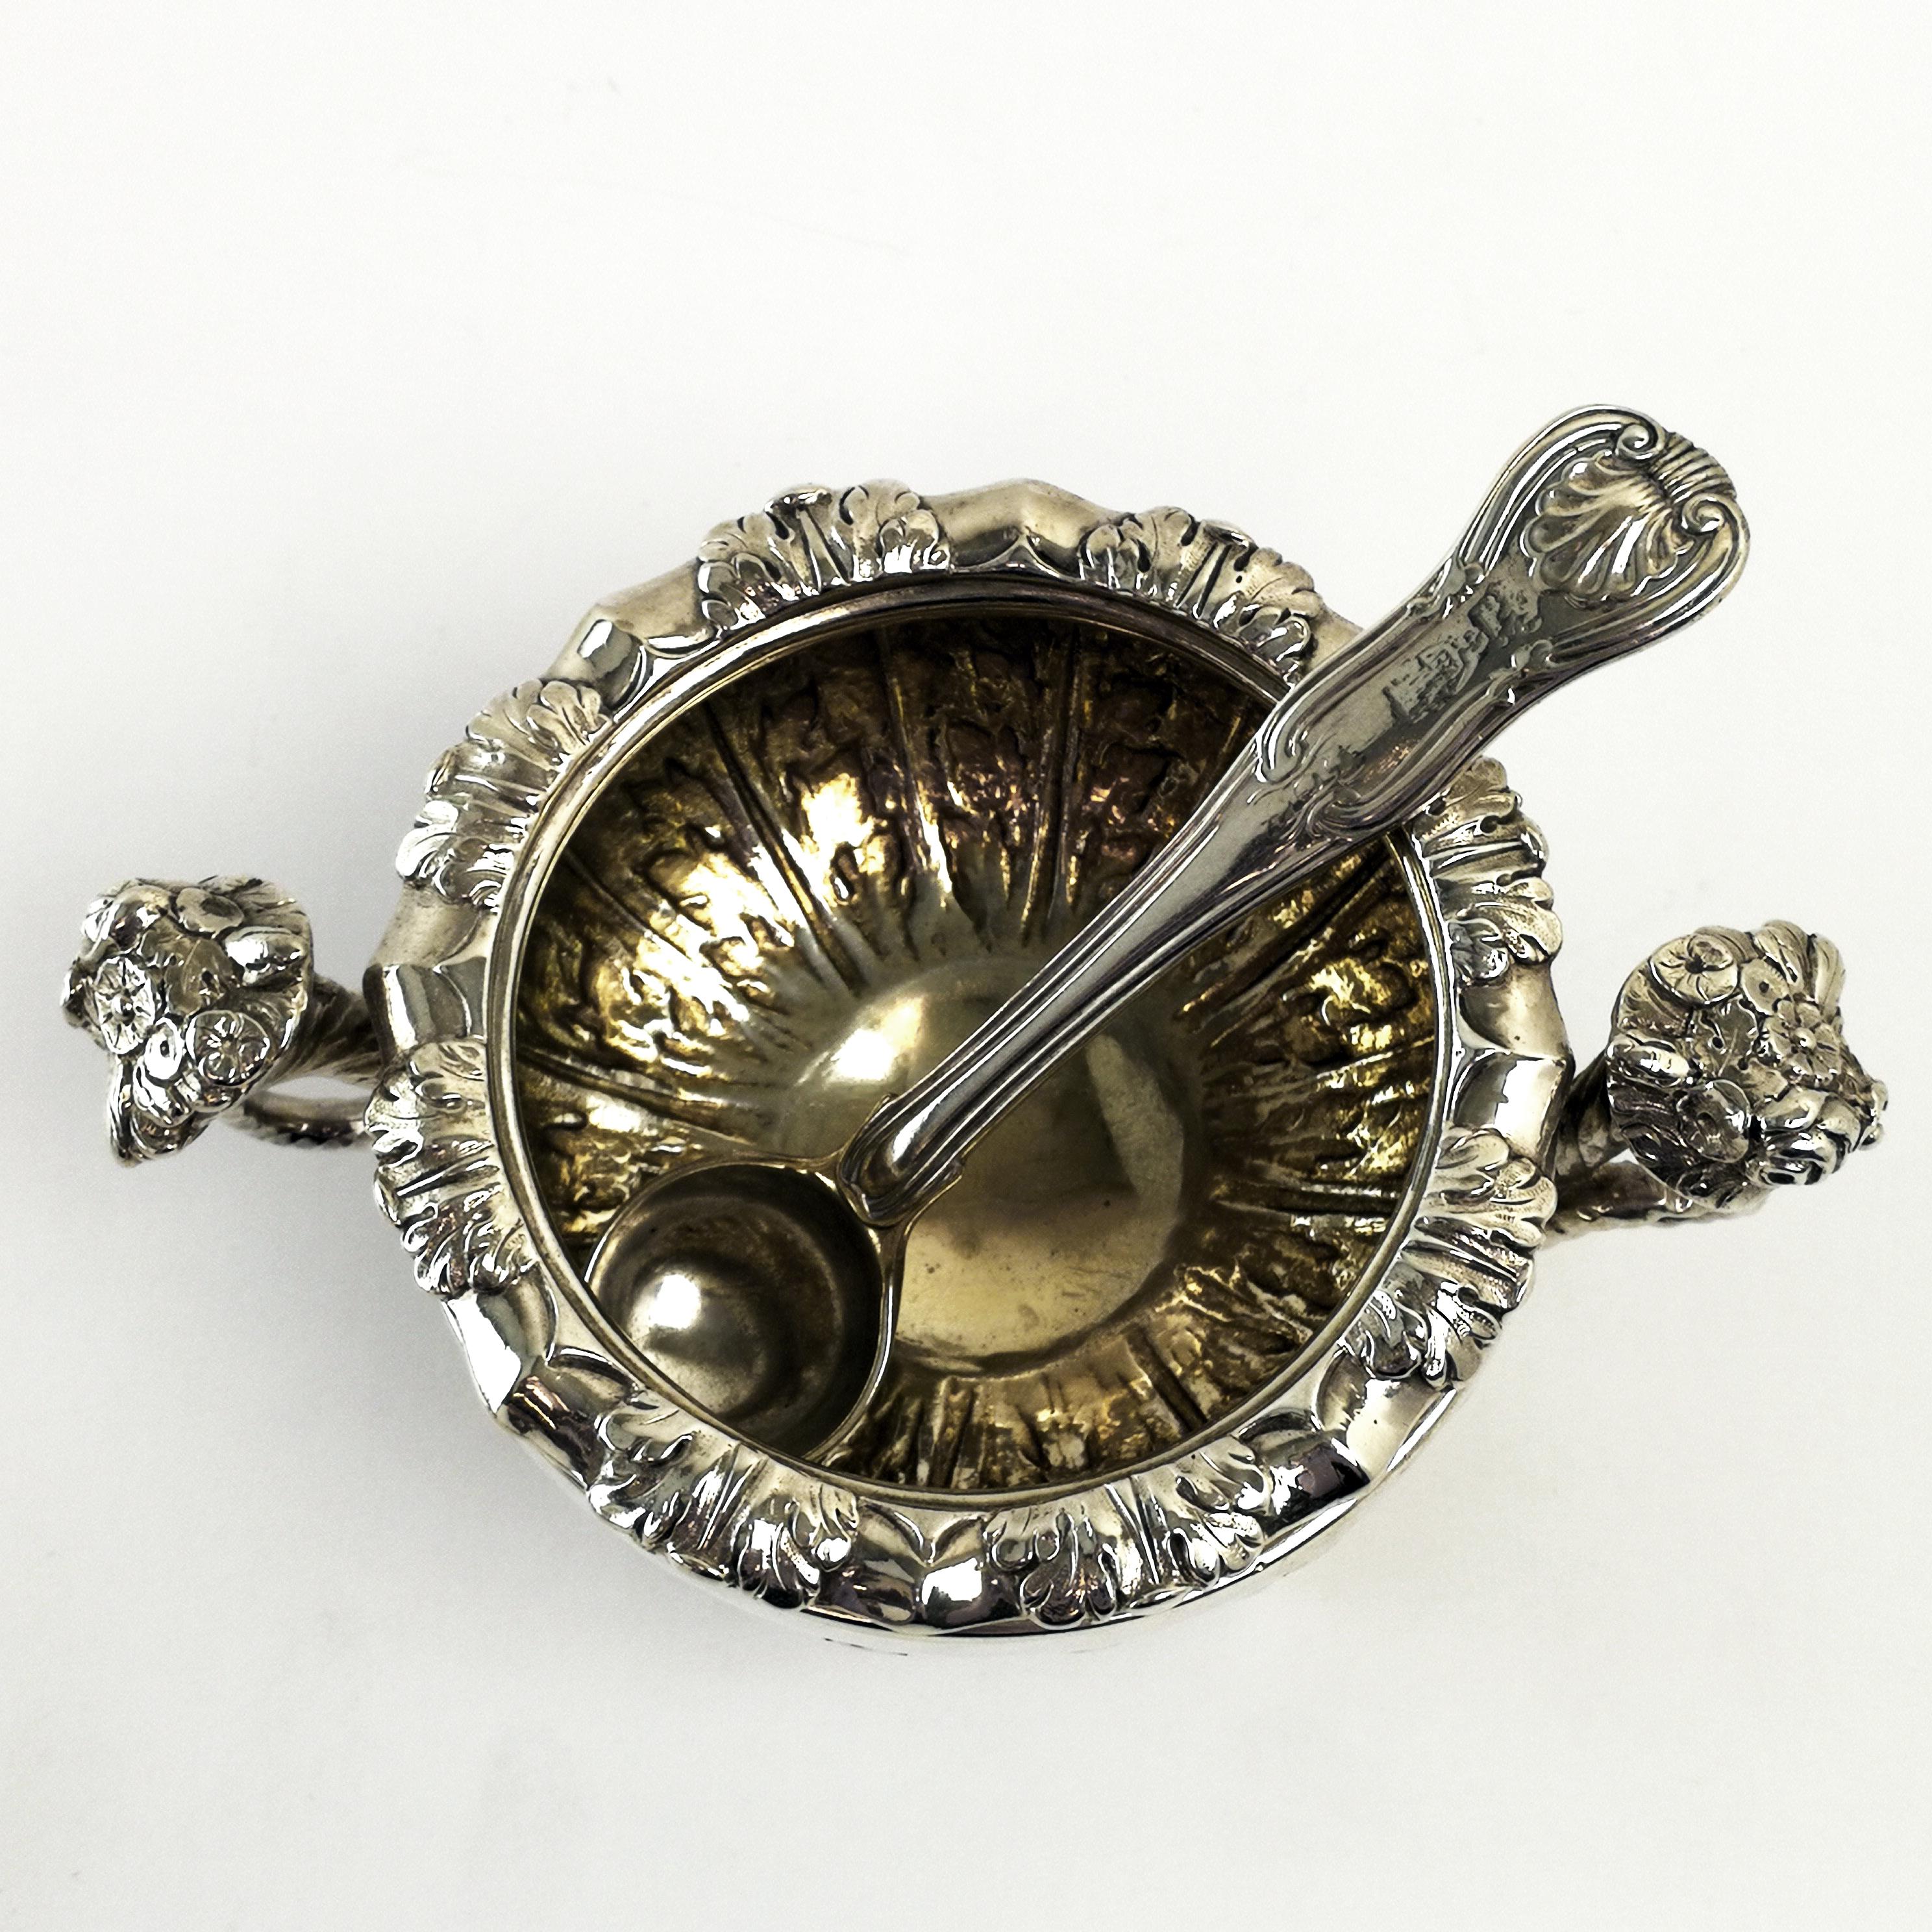 Set 4 Antique Sterling Silver Salts & Spoons / Salt Pinch Pots 1808/9 George III 1